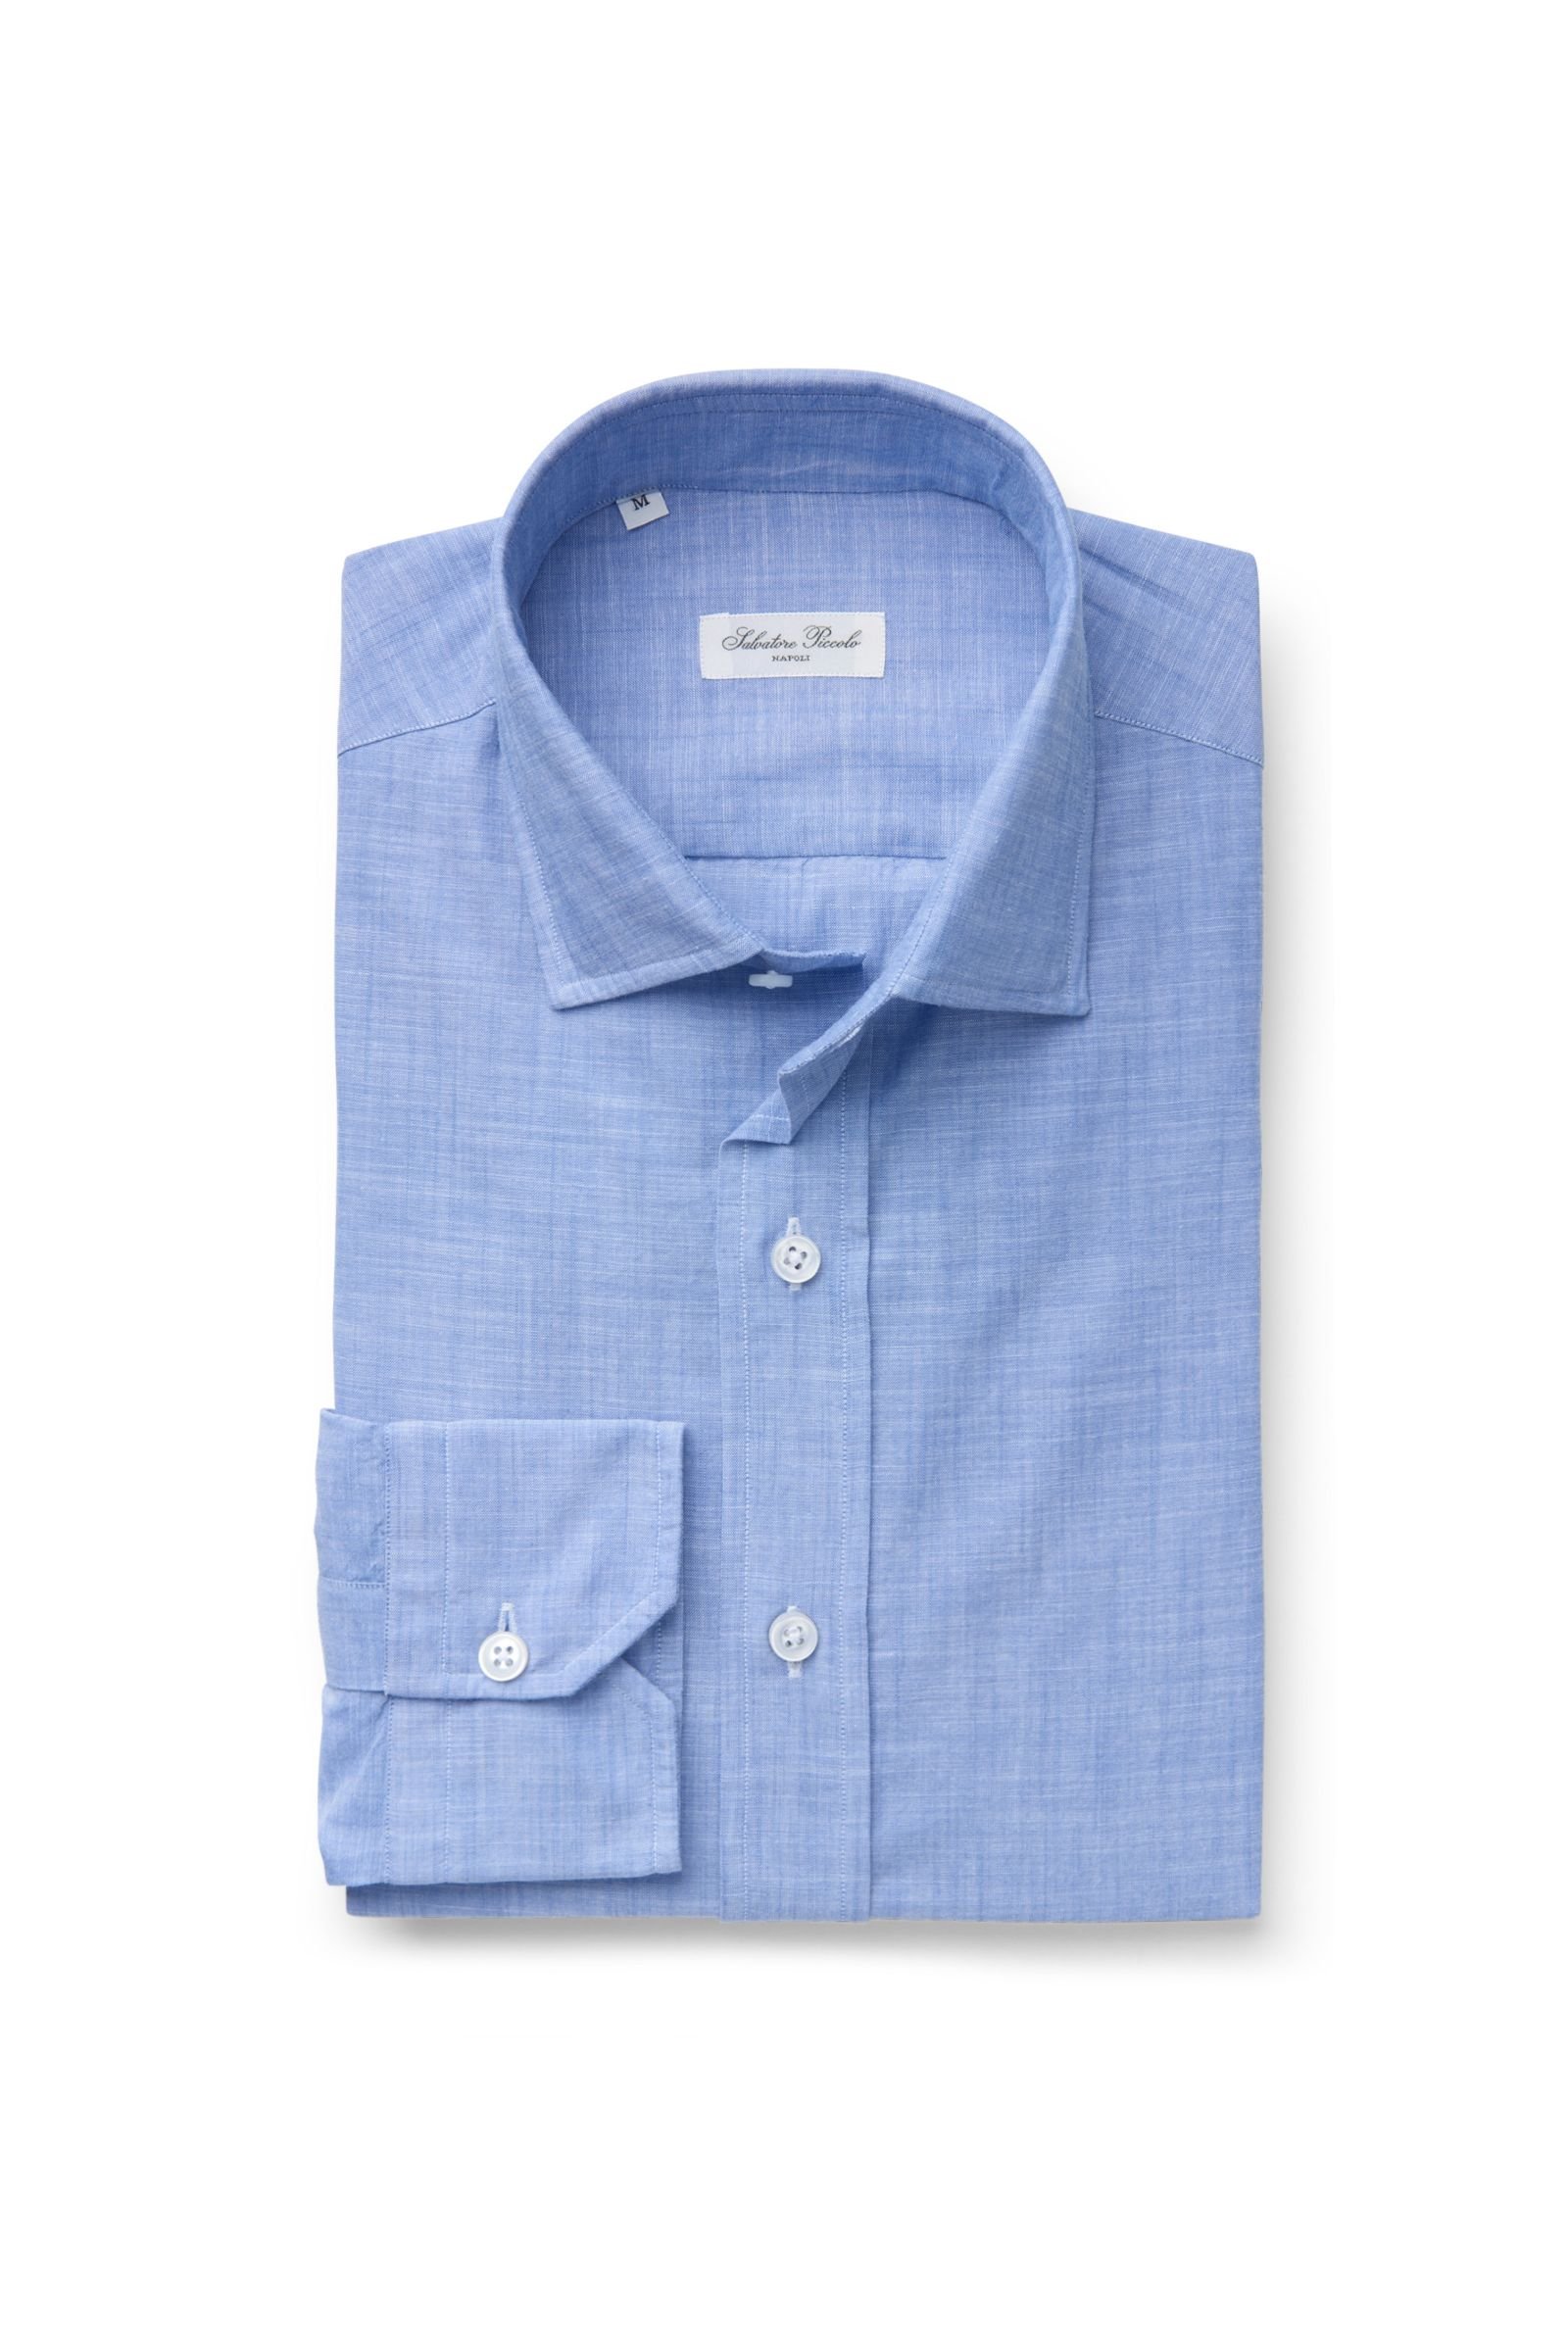 Casual shirt with a shark collar, smoky blue